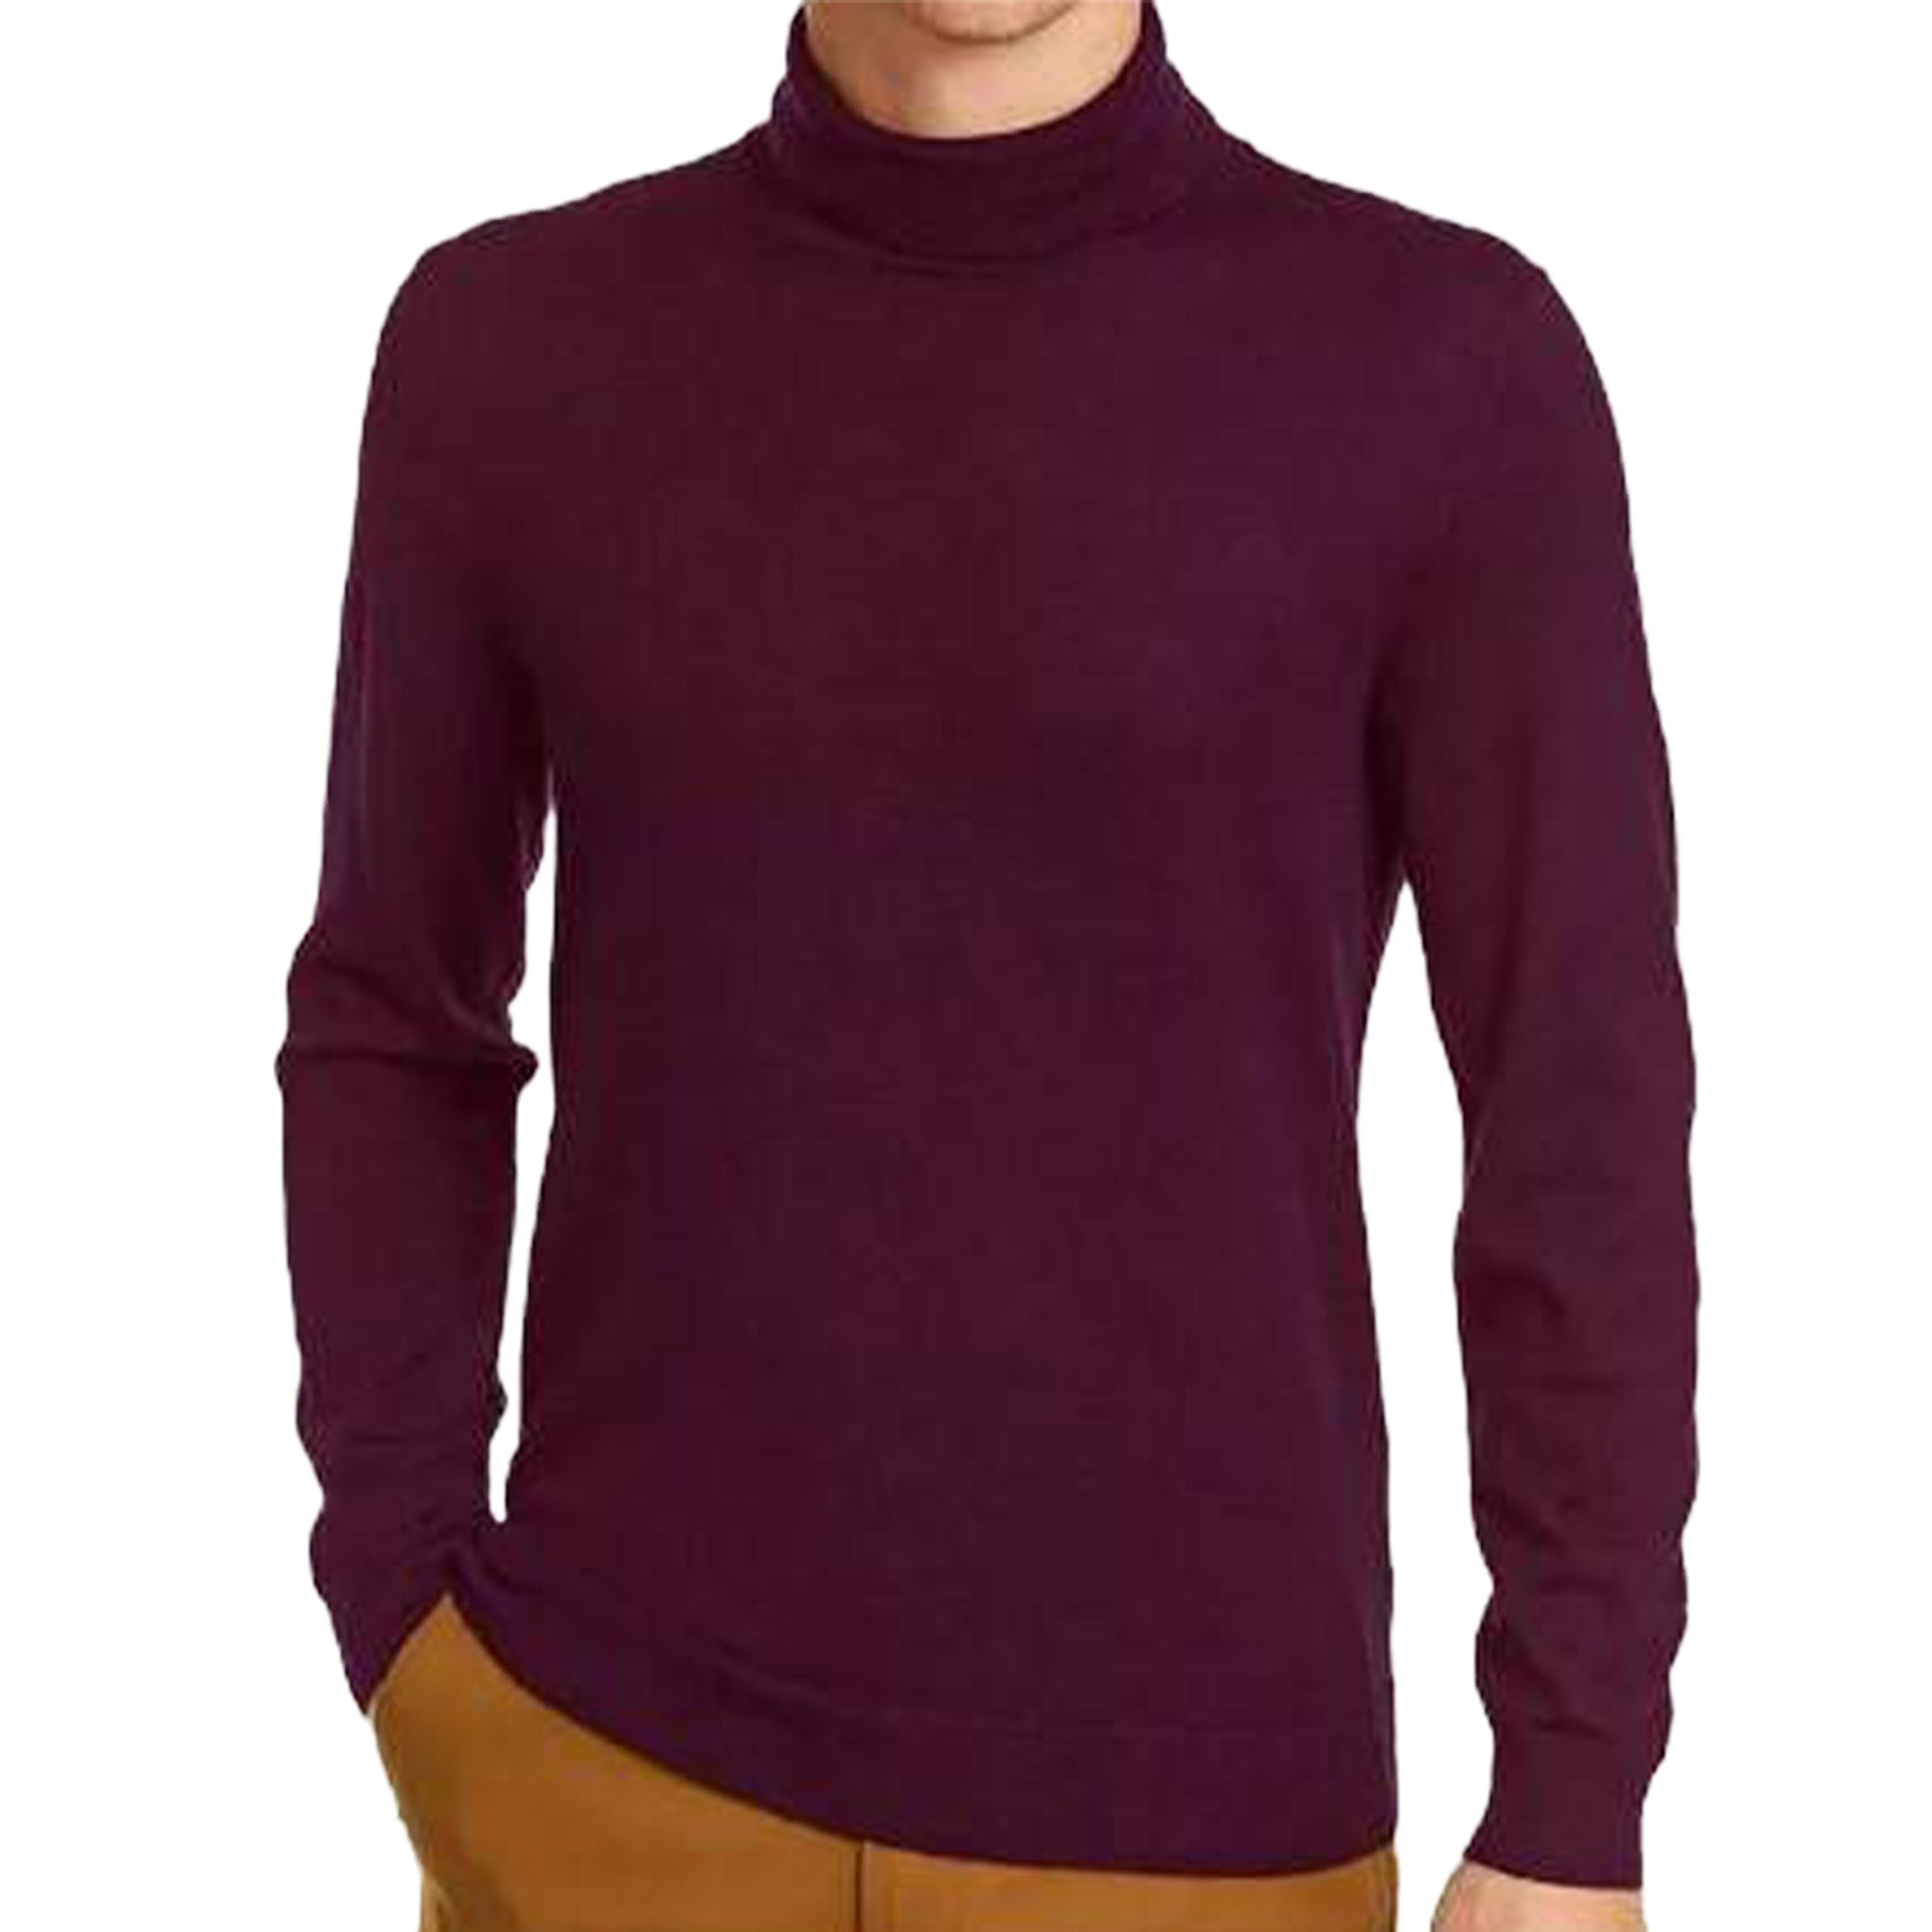 Men's Burgundy Turtle Neck Sweater